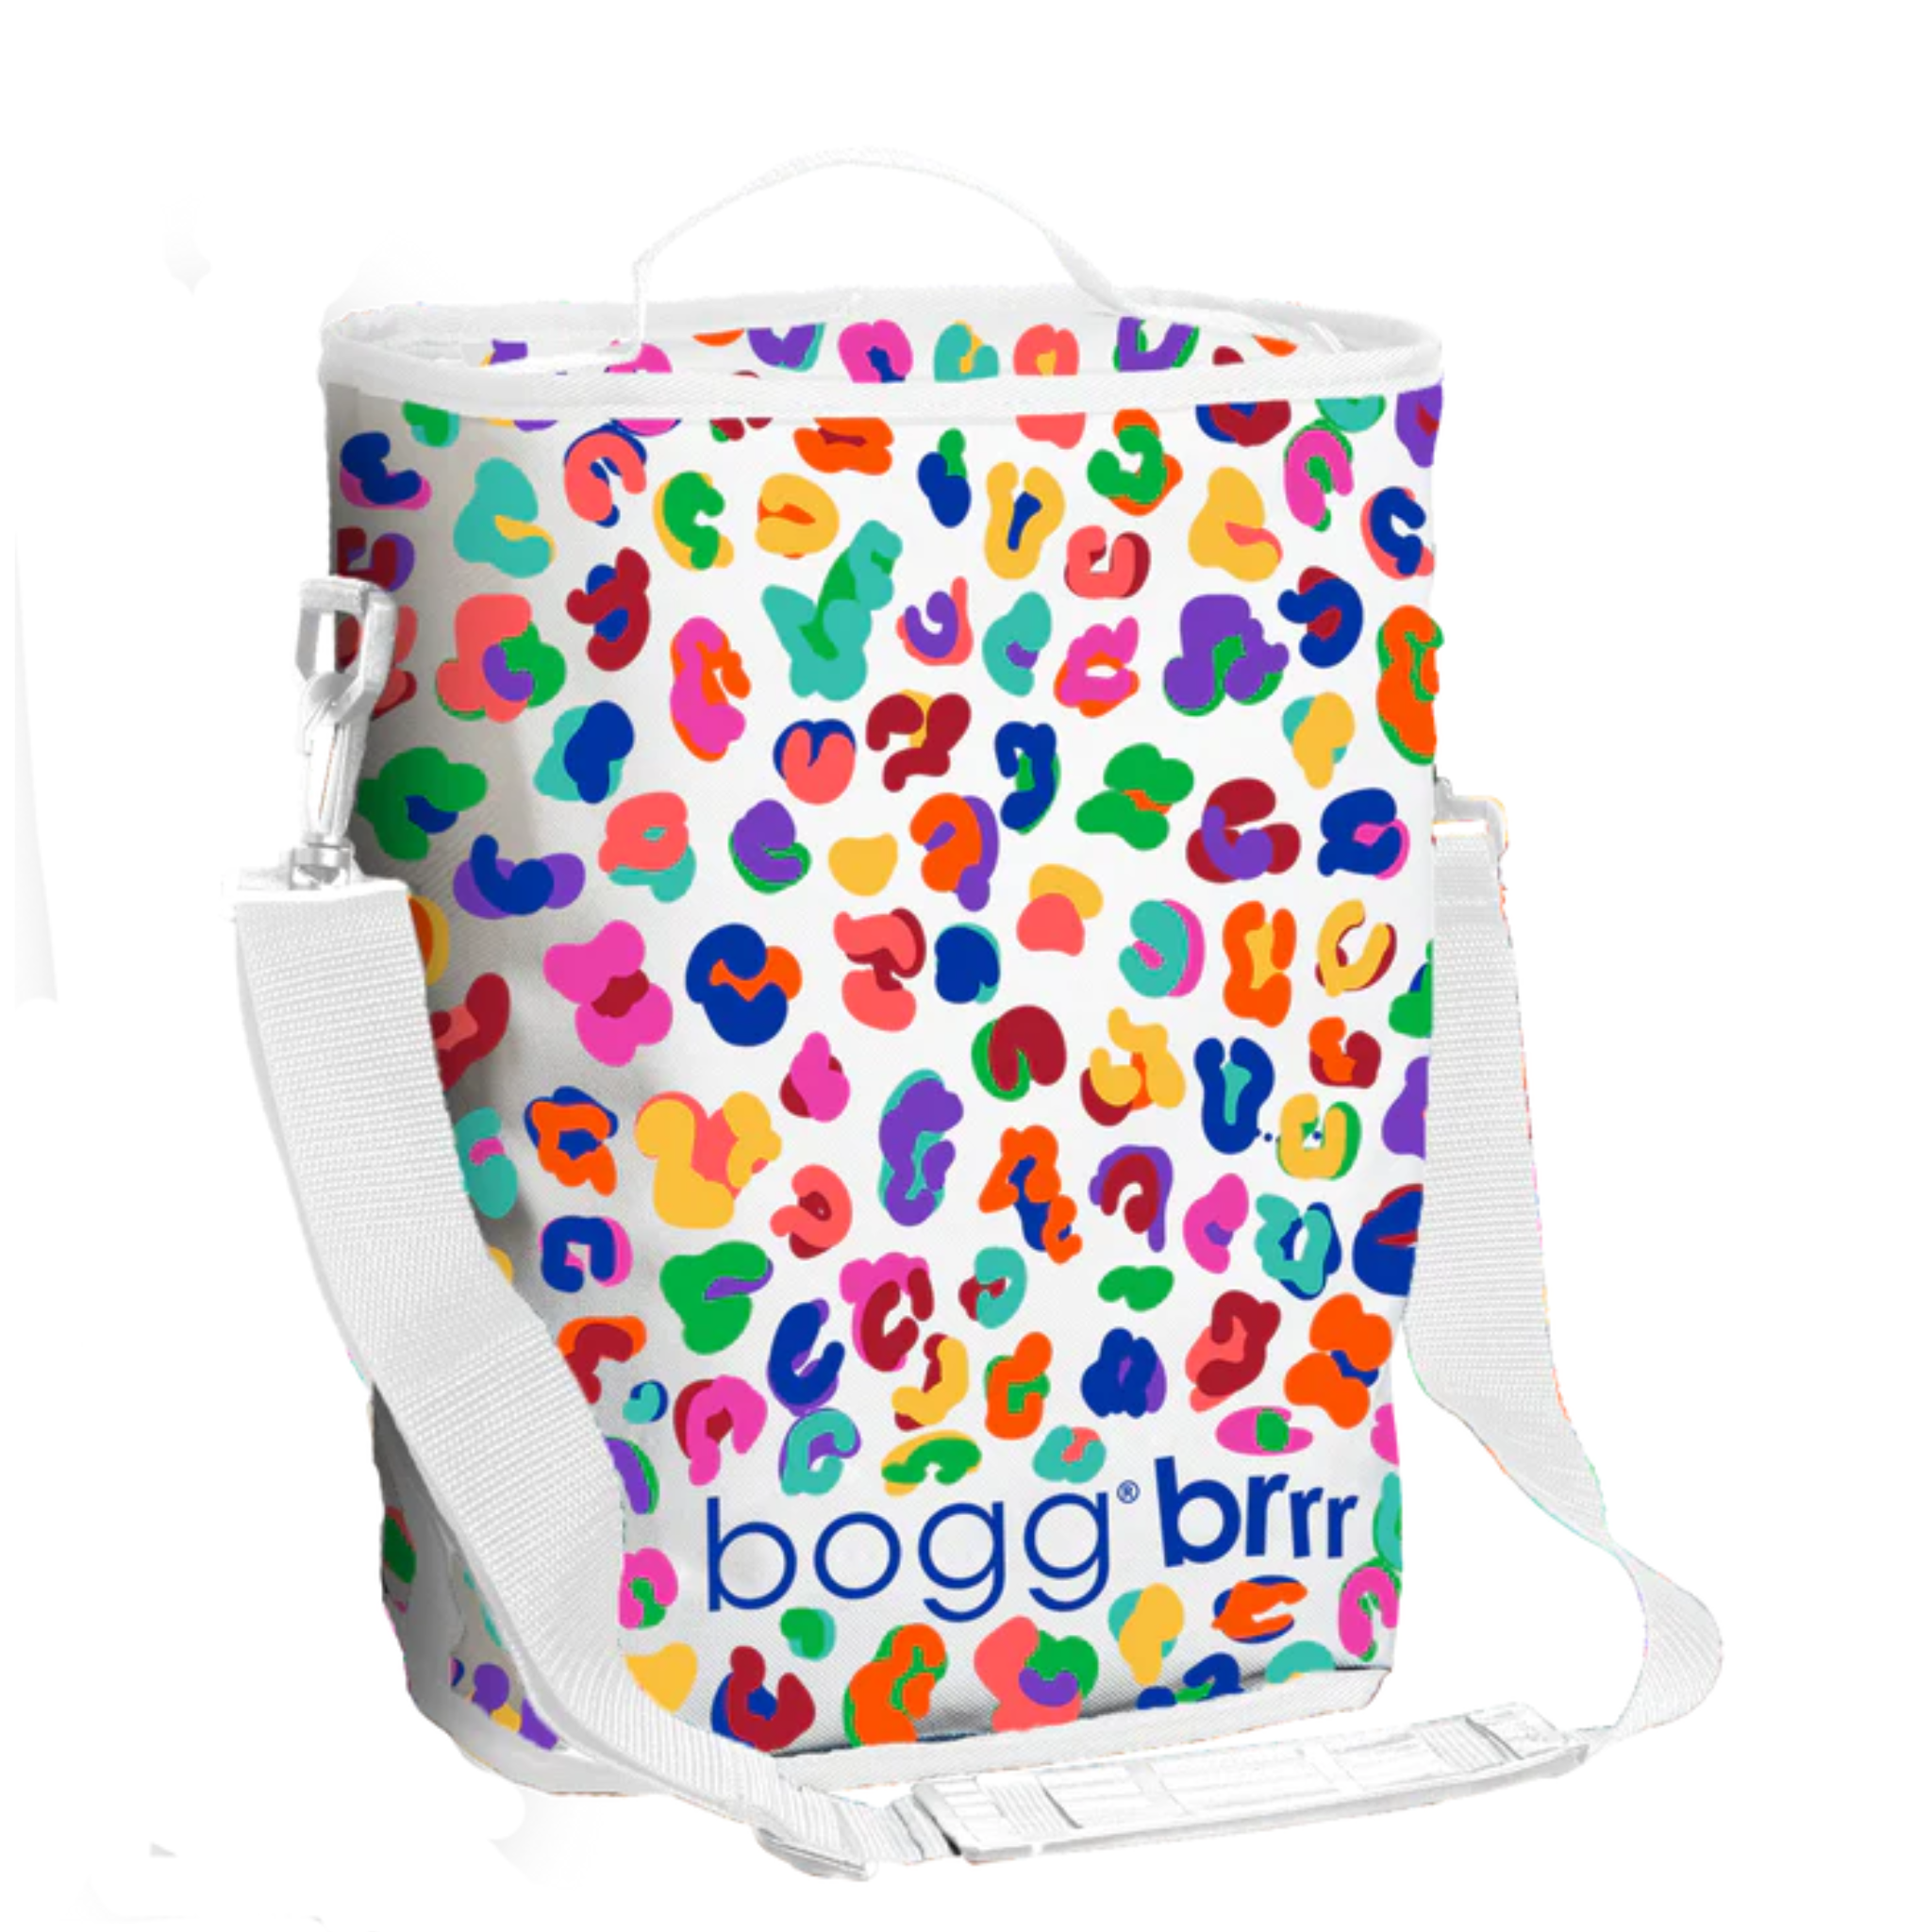 Bogg® Brrr and a half -Cooler Inserts